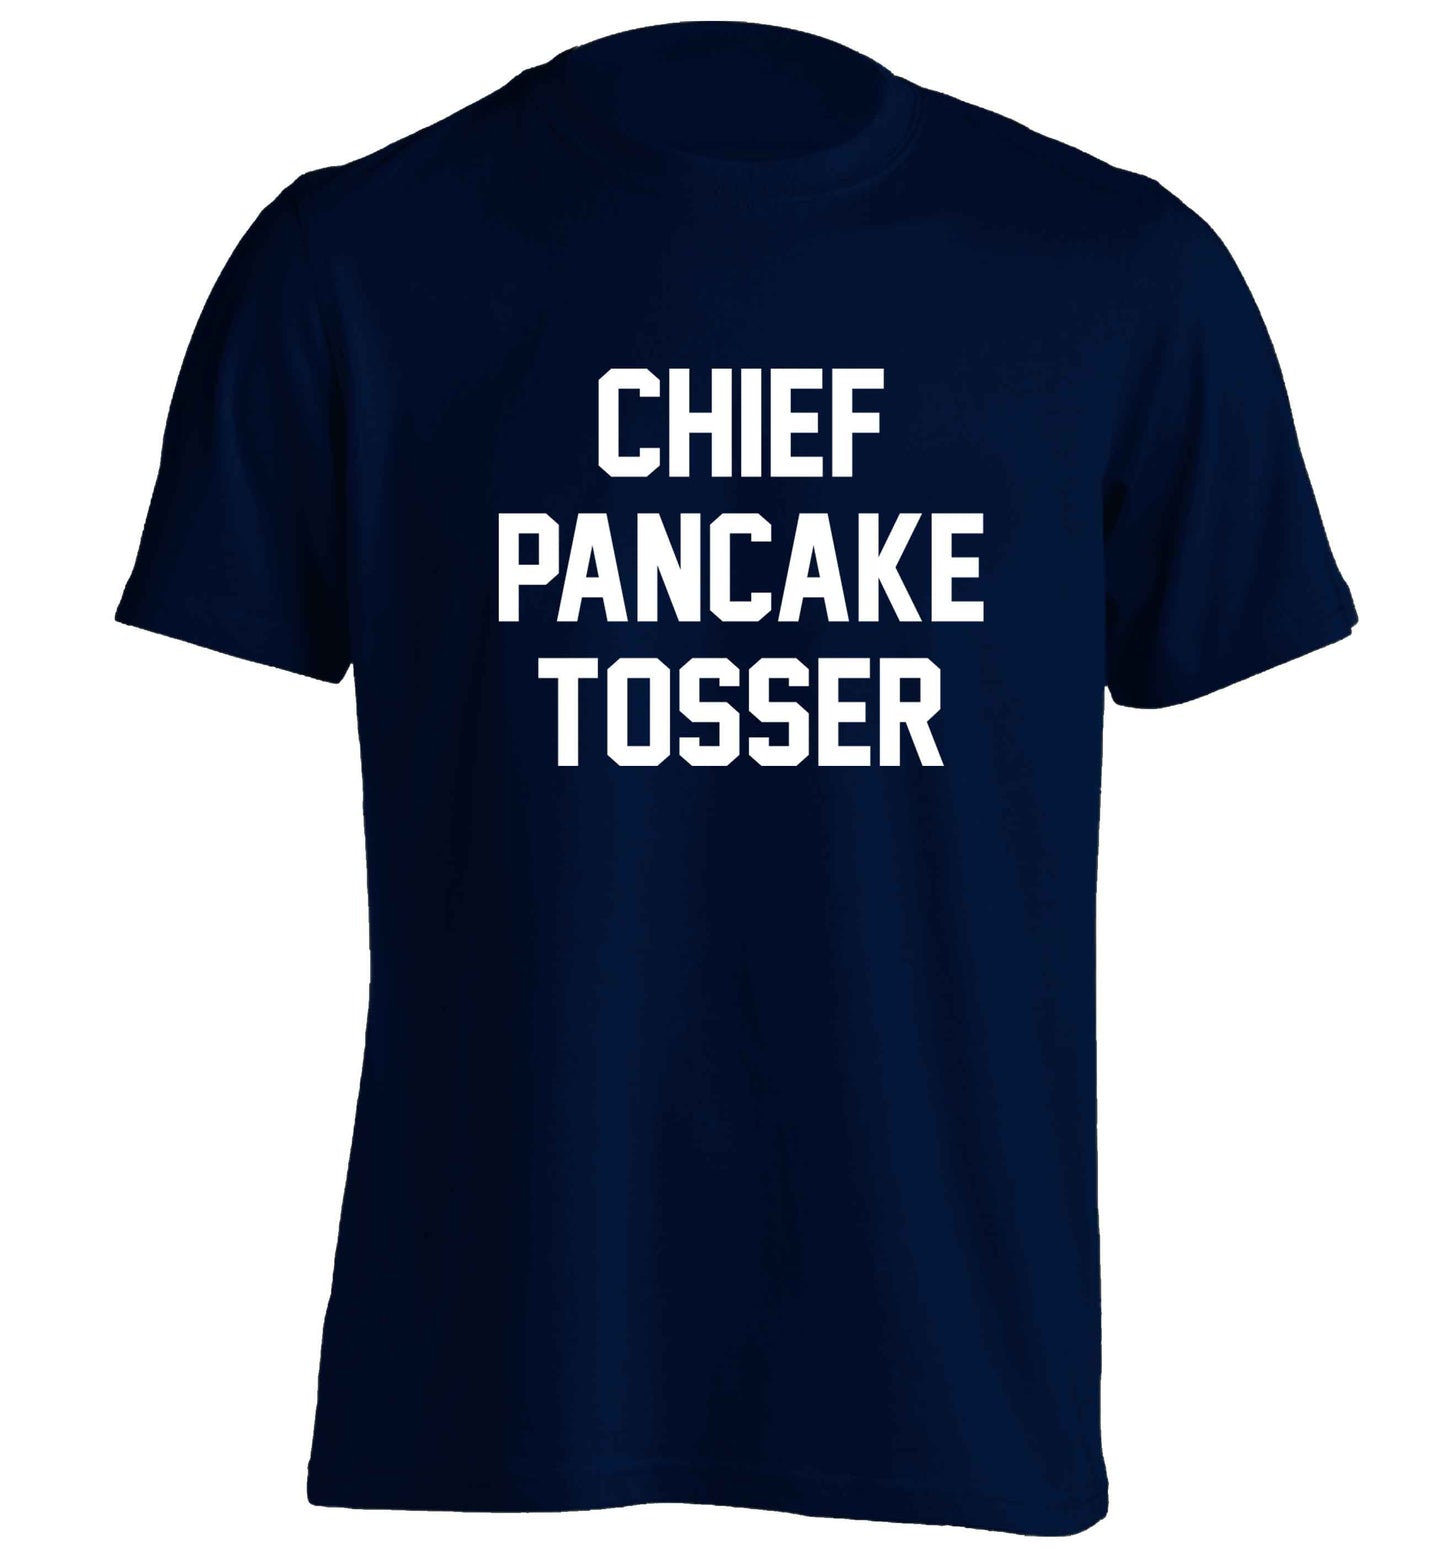 Chief pancake tosser adults unisex navy Tshirt 2XL